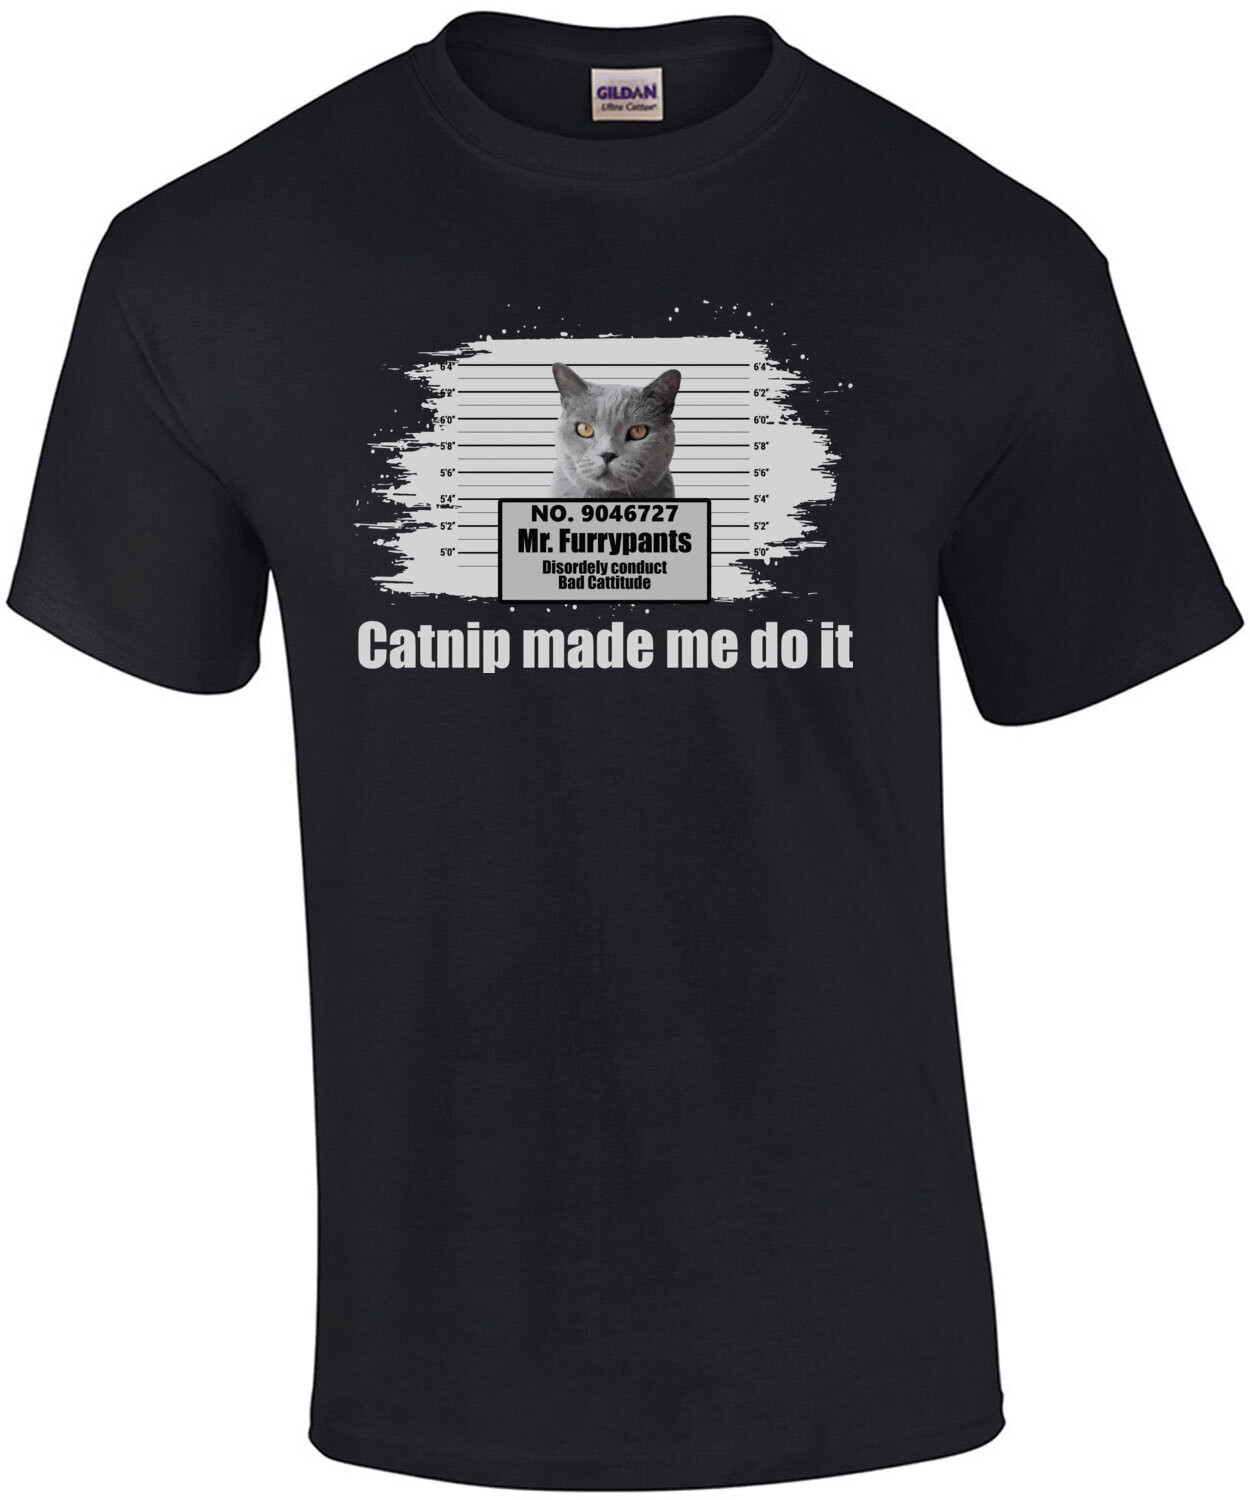 Catnip made me do it - funny cat t-shirt